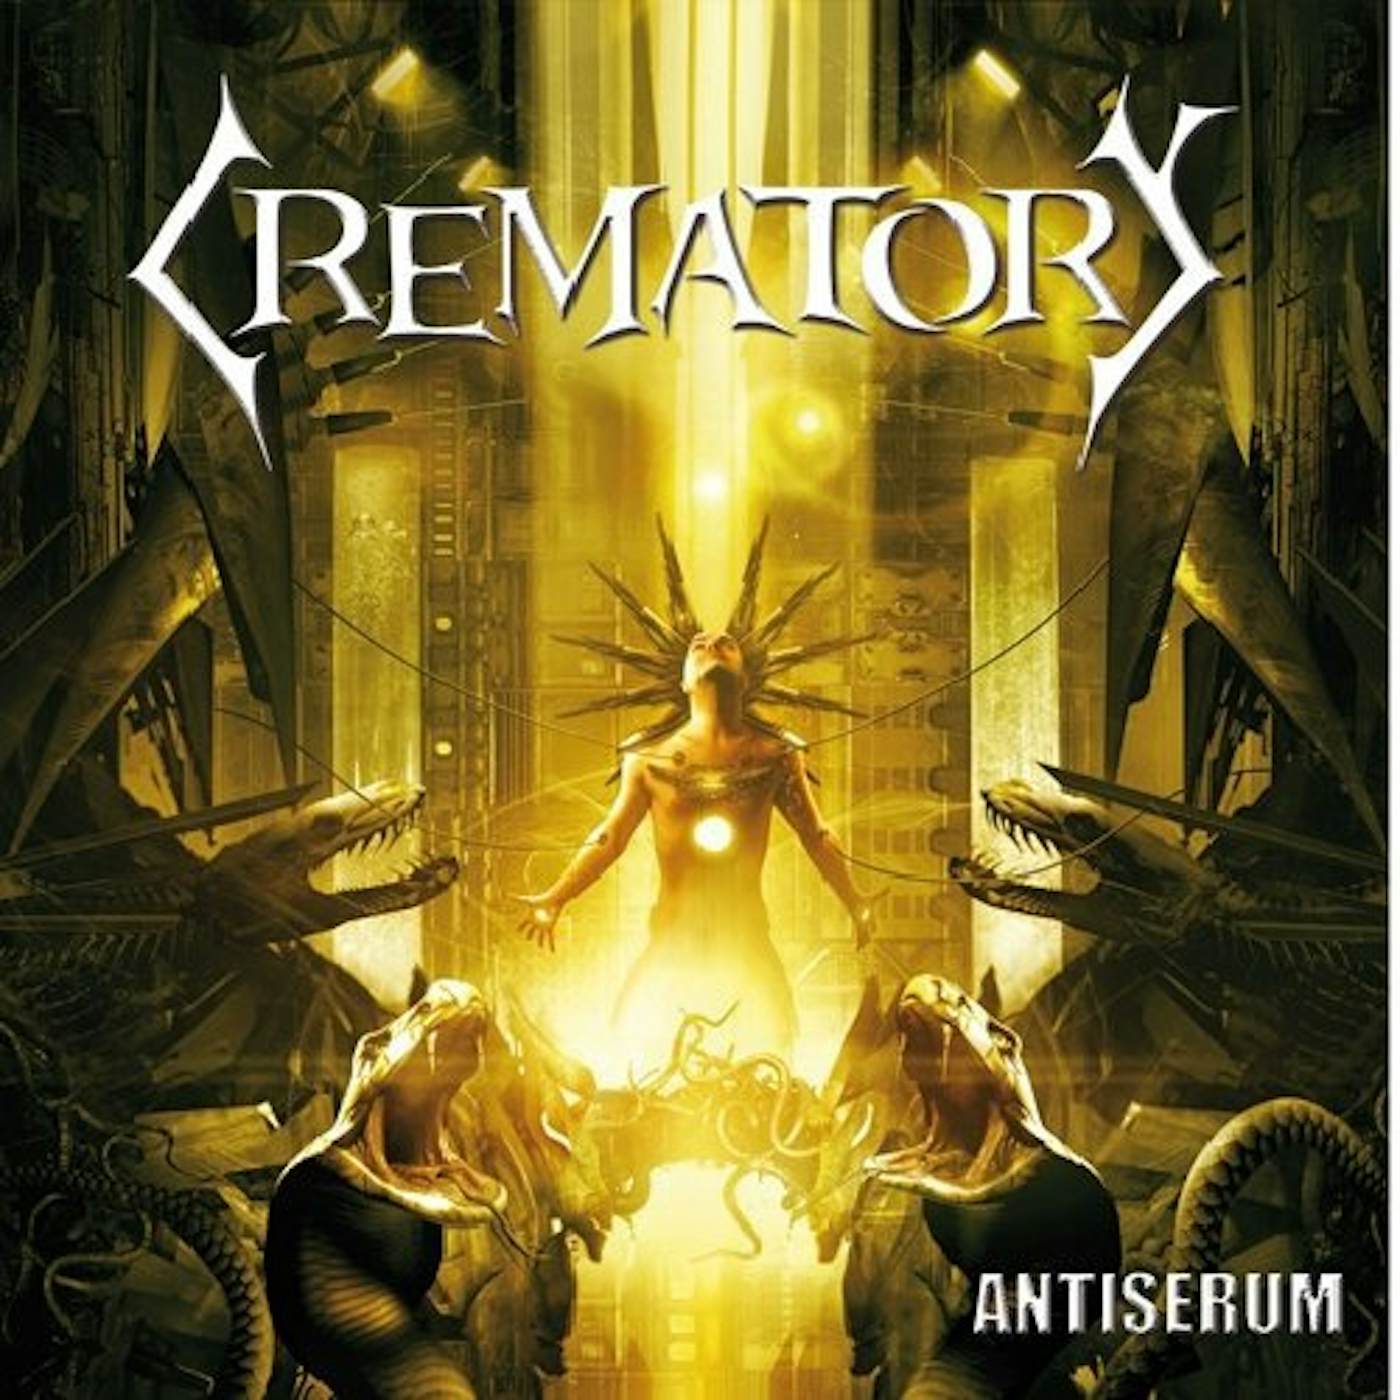 Crematory Antiserum Vinyl Record